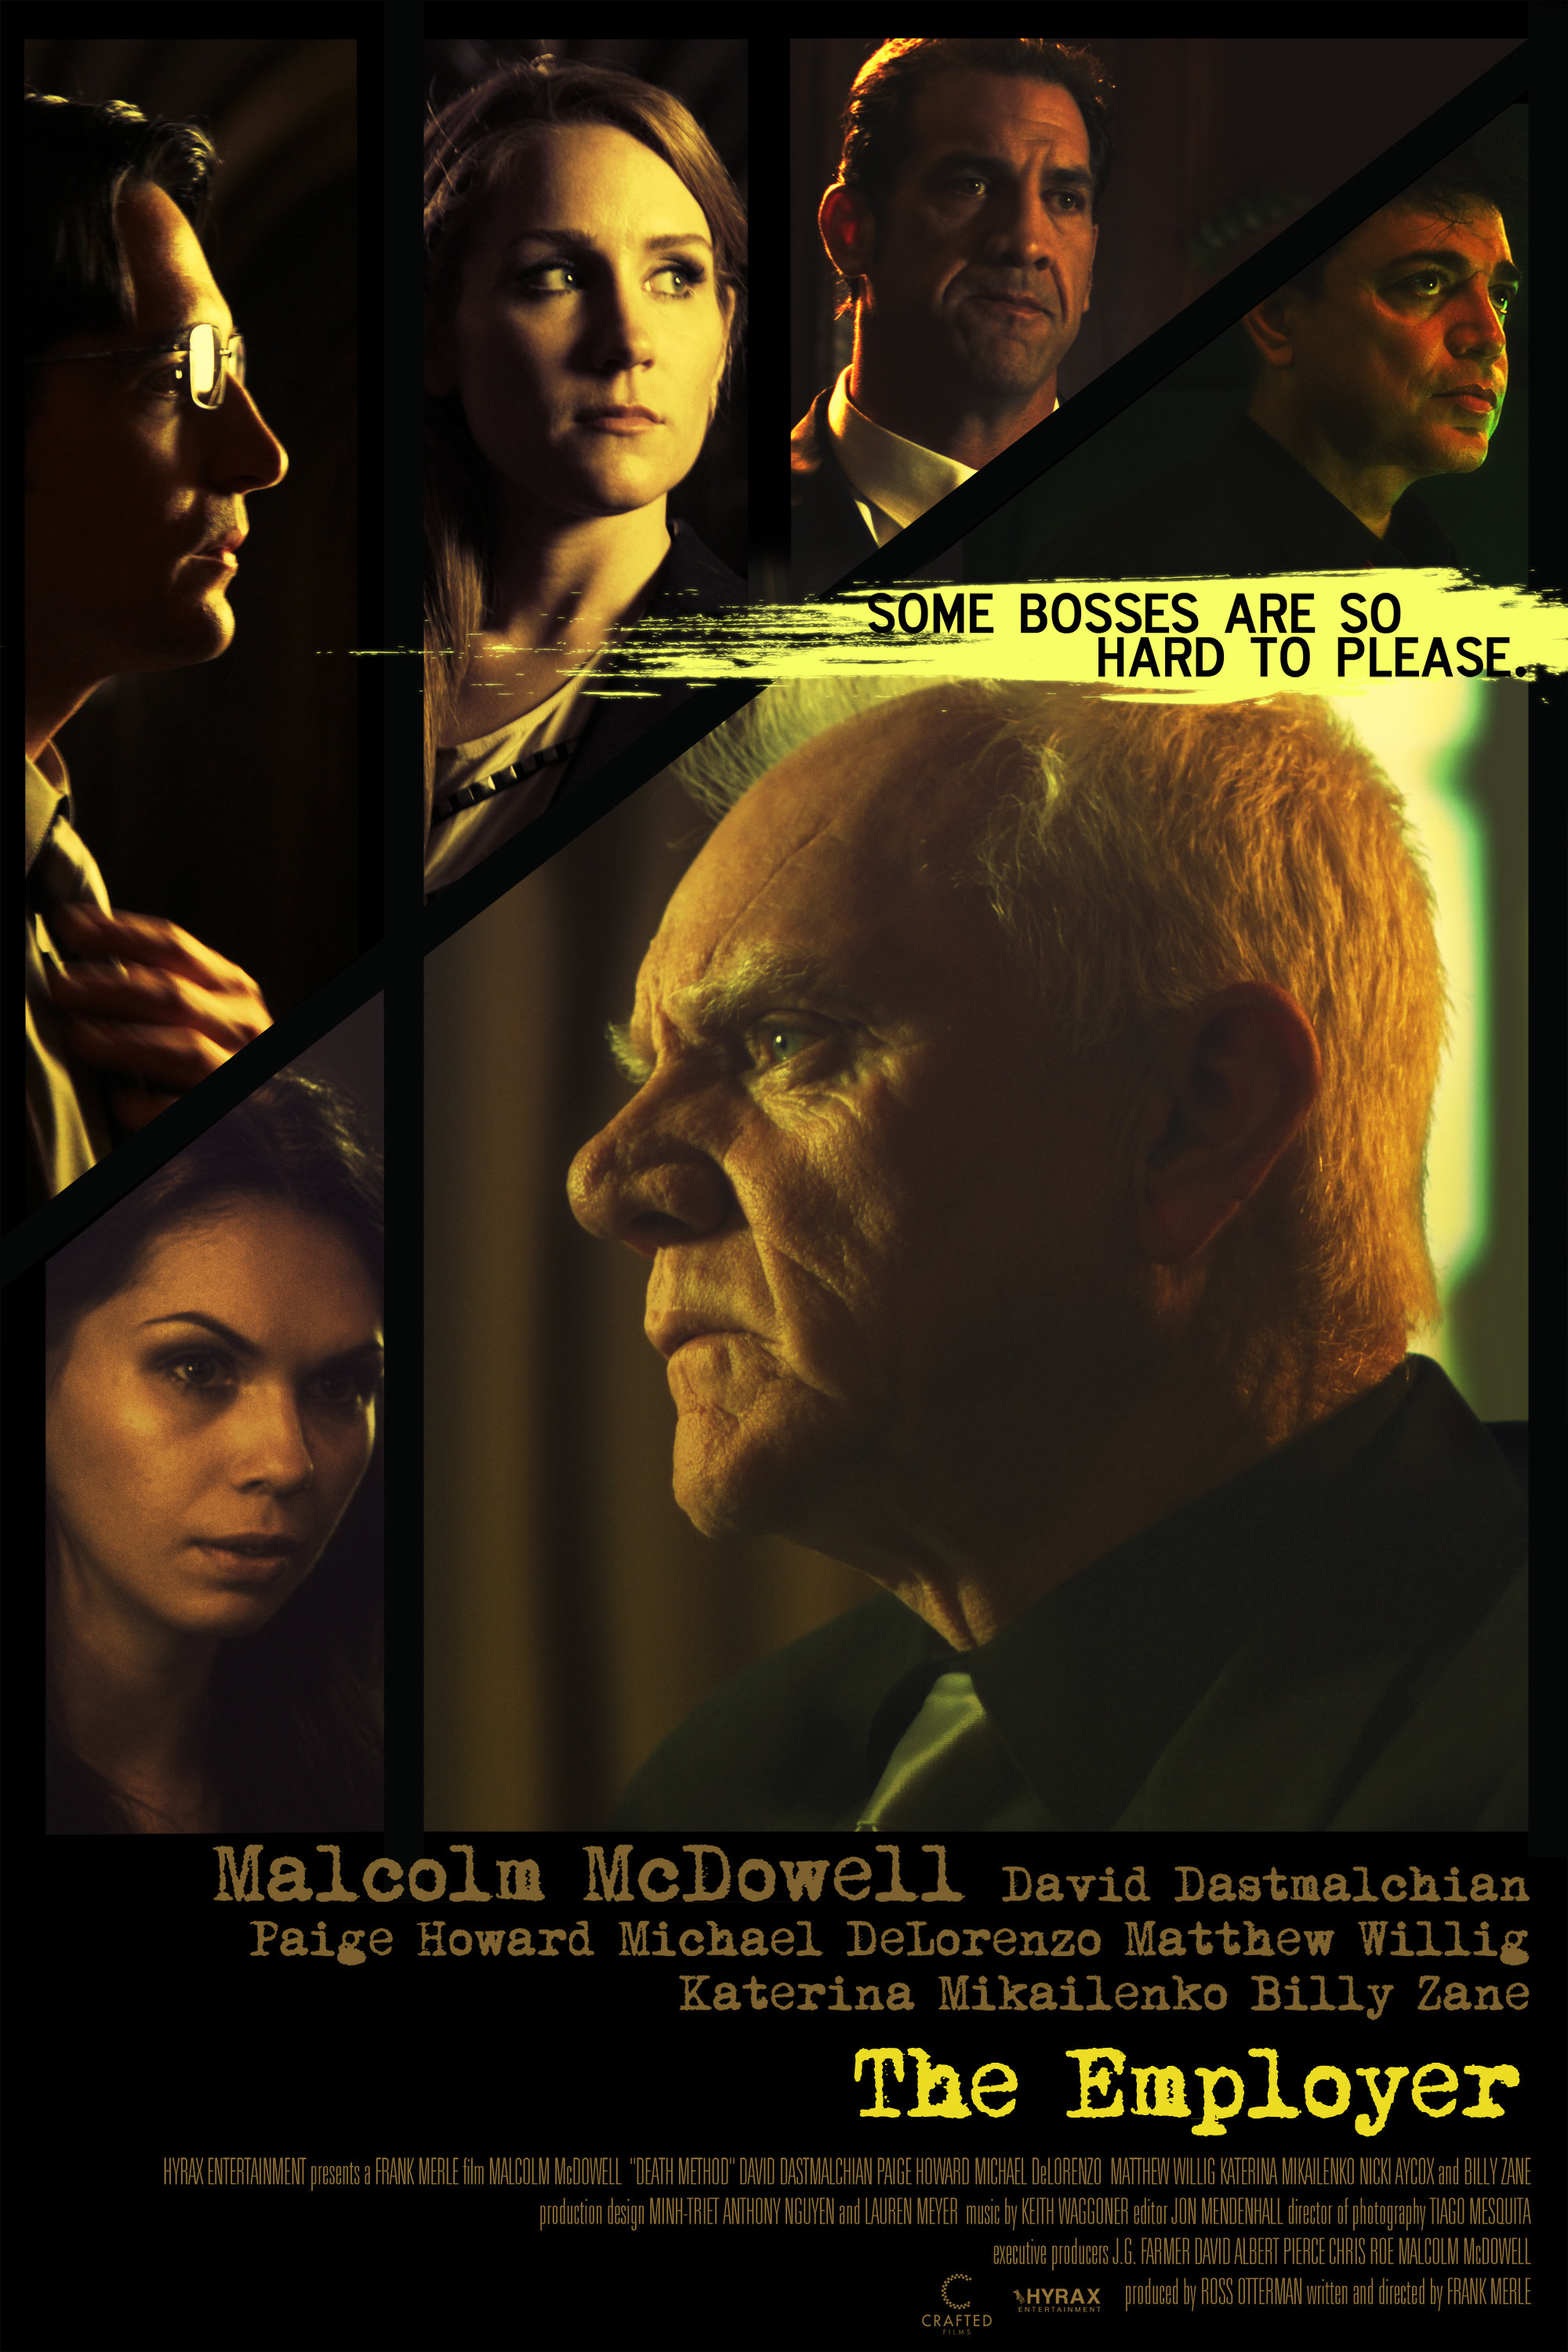 Malcolm McDowell, Michael DeLorenzo, Katerina Kopel, Matthew Willig, Paige Howard and David Dastmalchian in The Employer (2013)